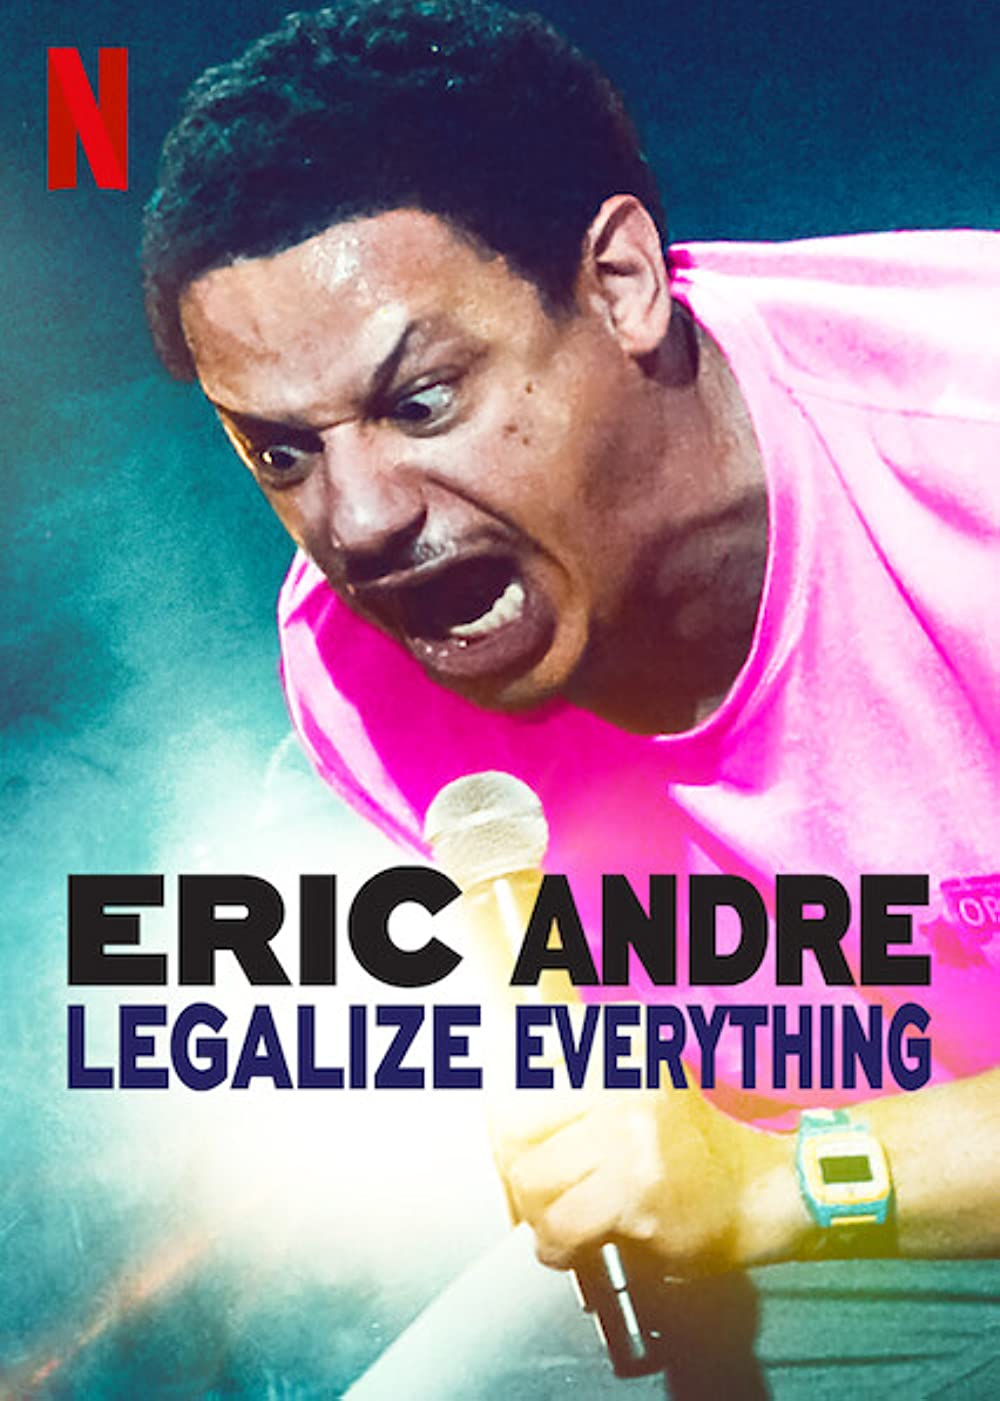 Filmbeschreibung zu Eric Andre: Legalize Everything